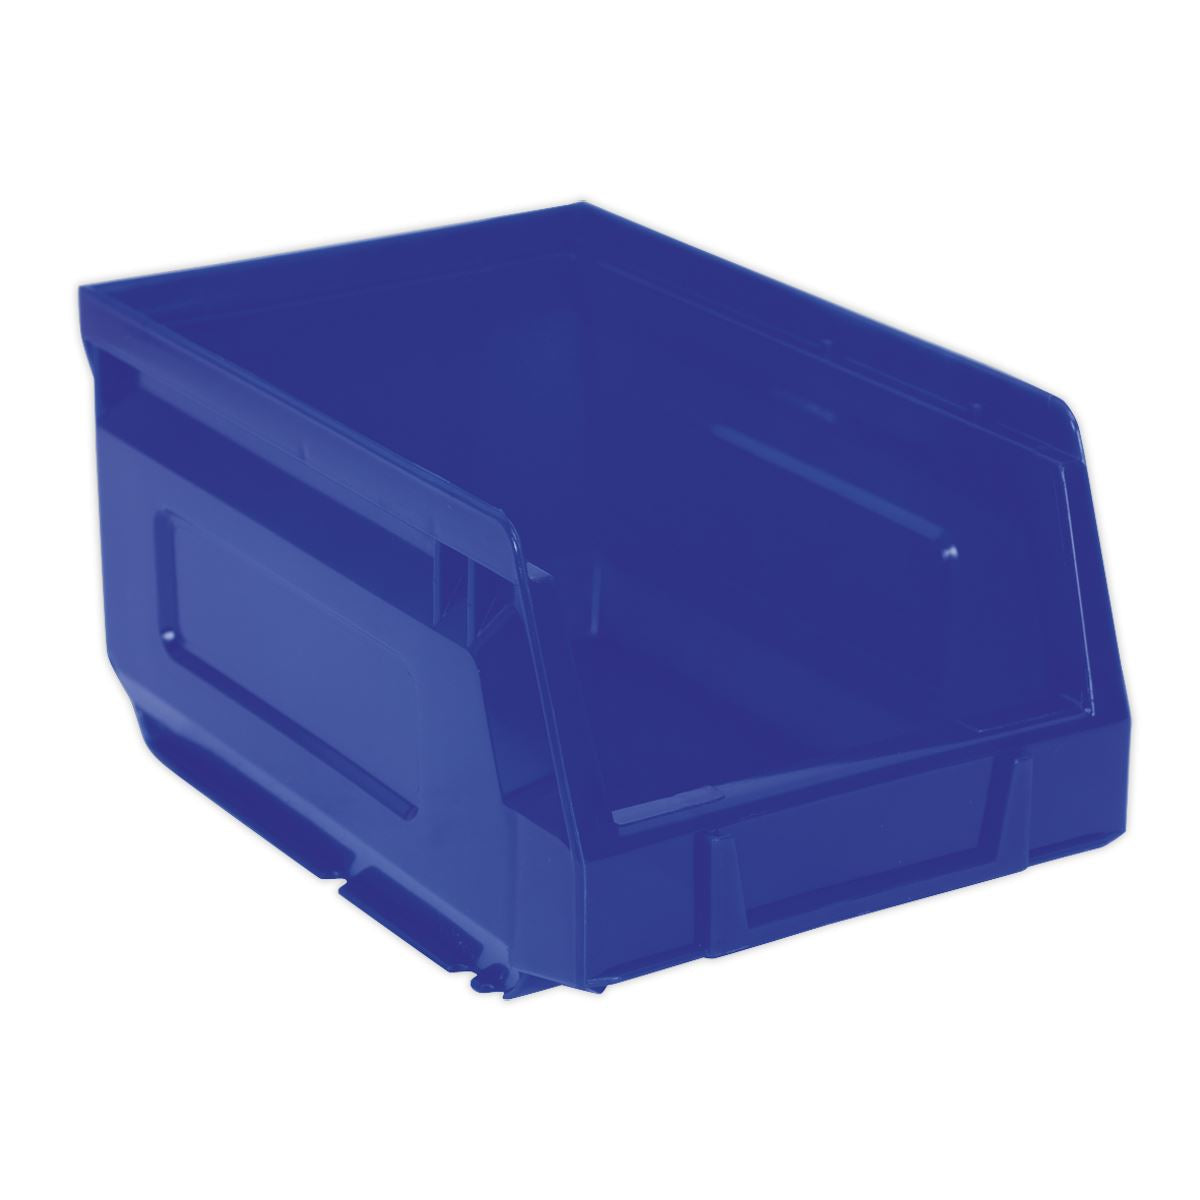 Sealey Plastic Storage Bin 105 x 165 x 85mm - Blue Pack of 24